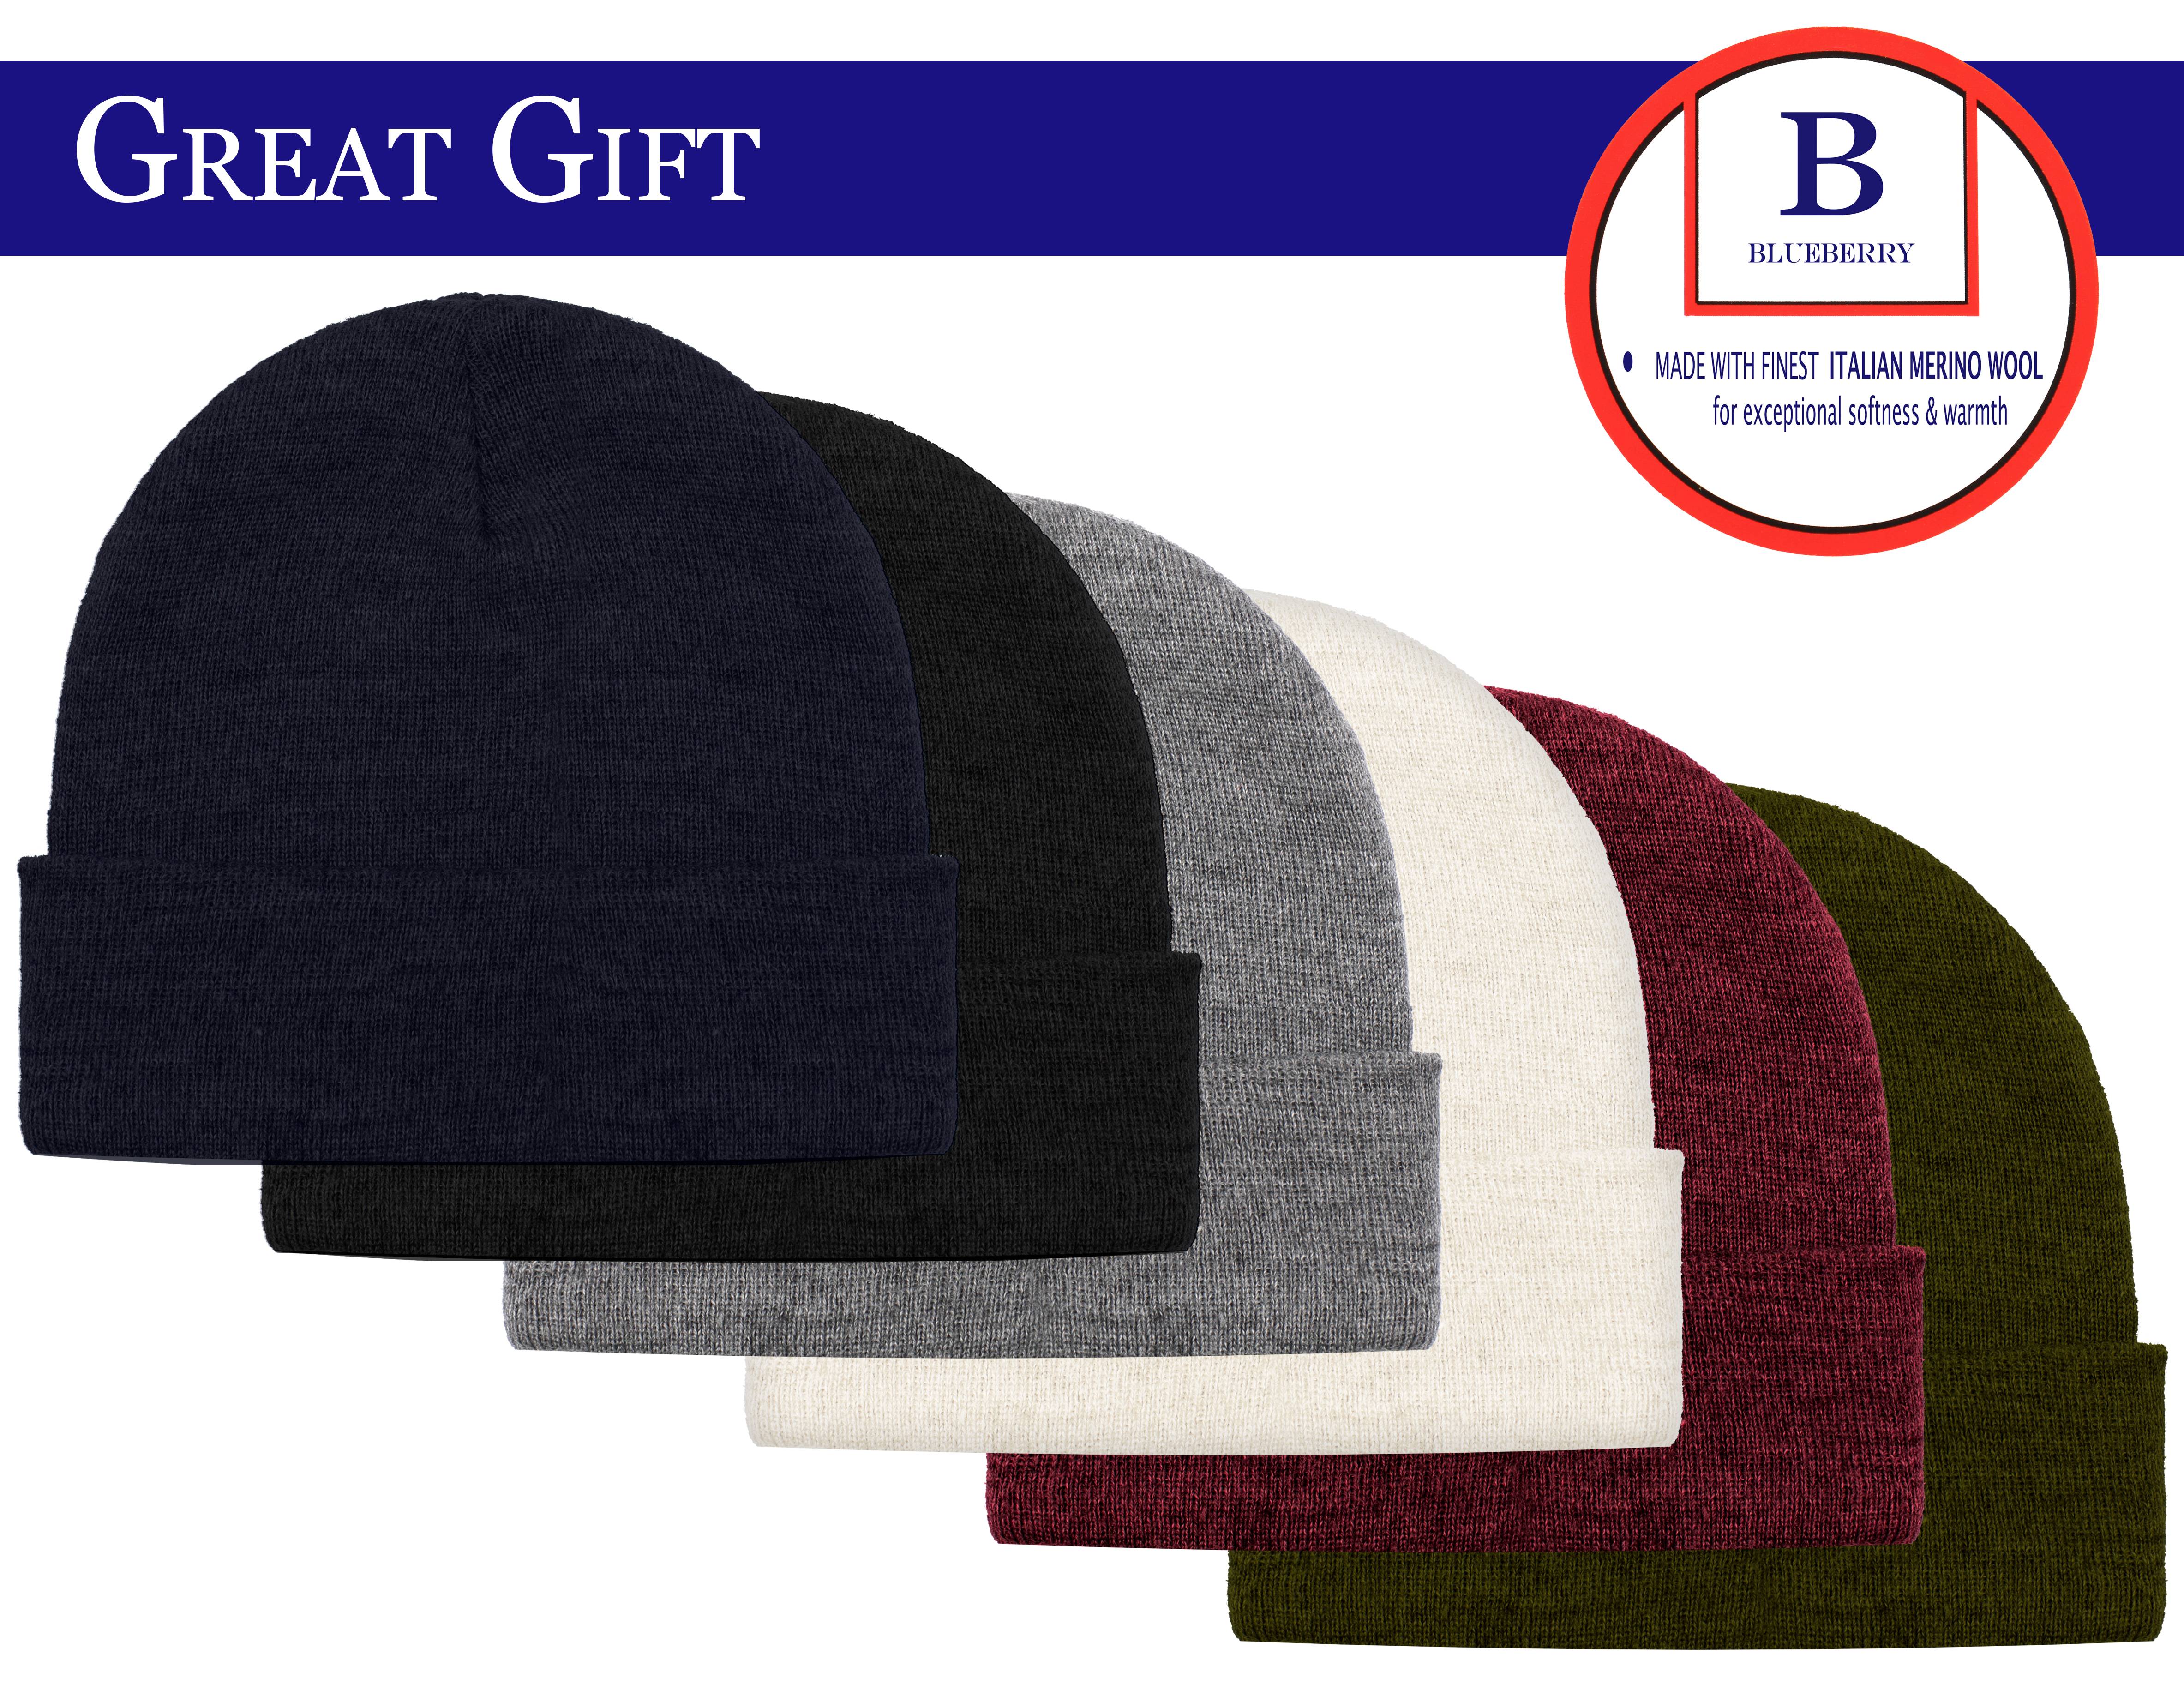 Blueberry Uniforms Burgundy Merino Wool Beanie Hat -Soft Winter and Activewear Watch Cap - image 6 of 6